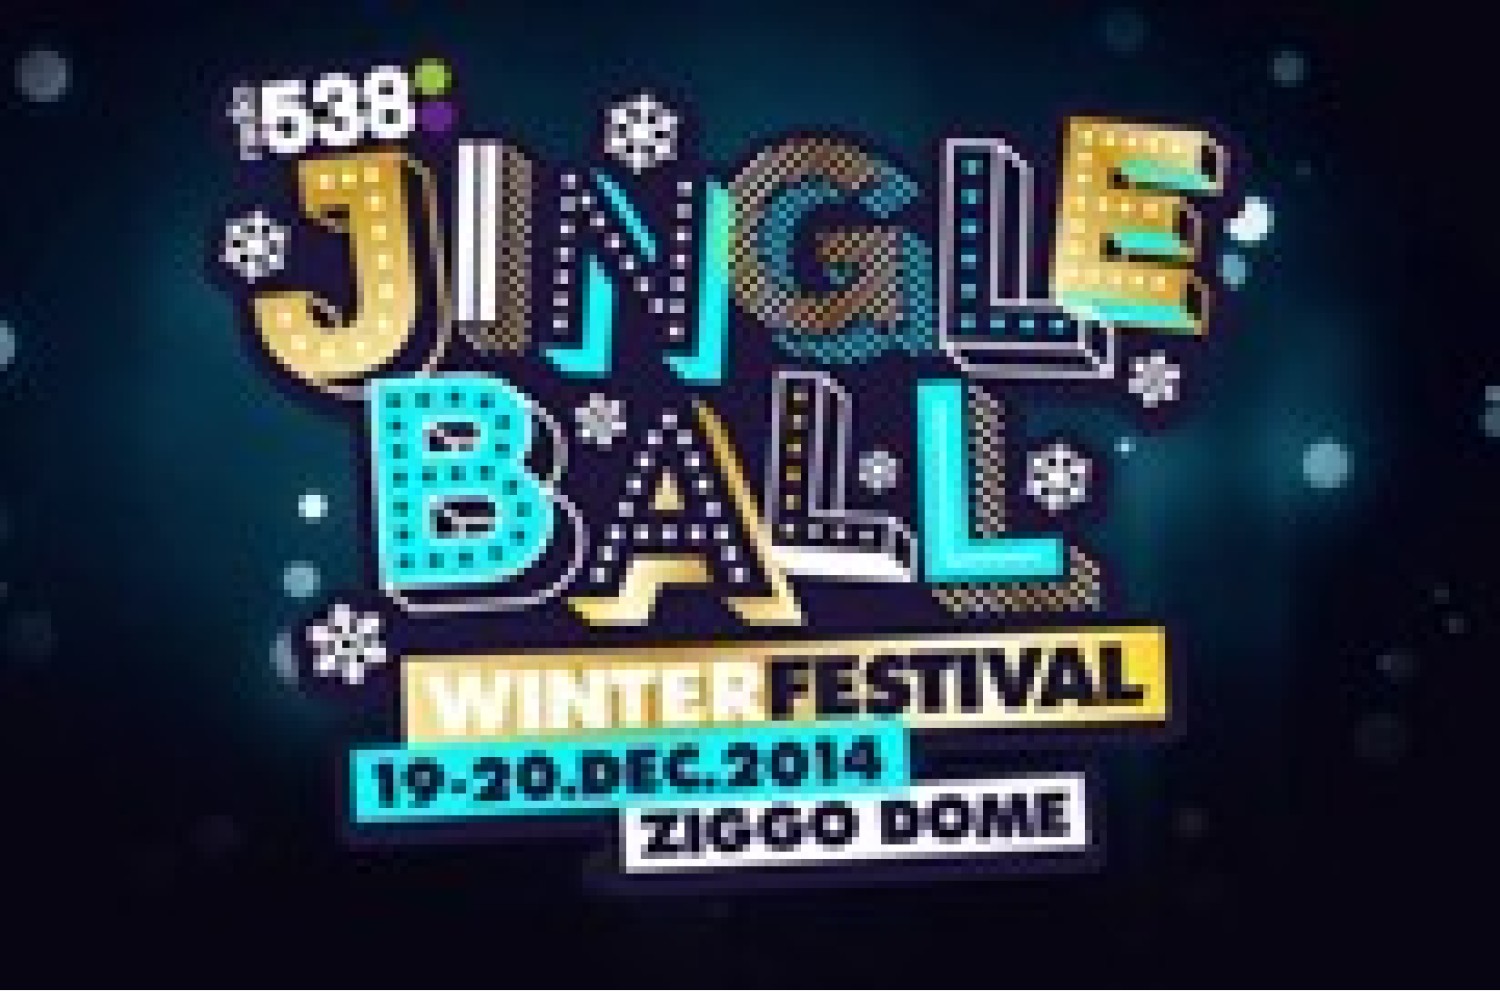 Party report: 538 JingleBall Winterfestival, Amsterdam (20-12-2014)